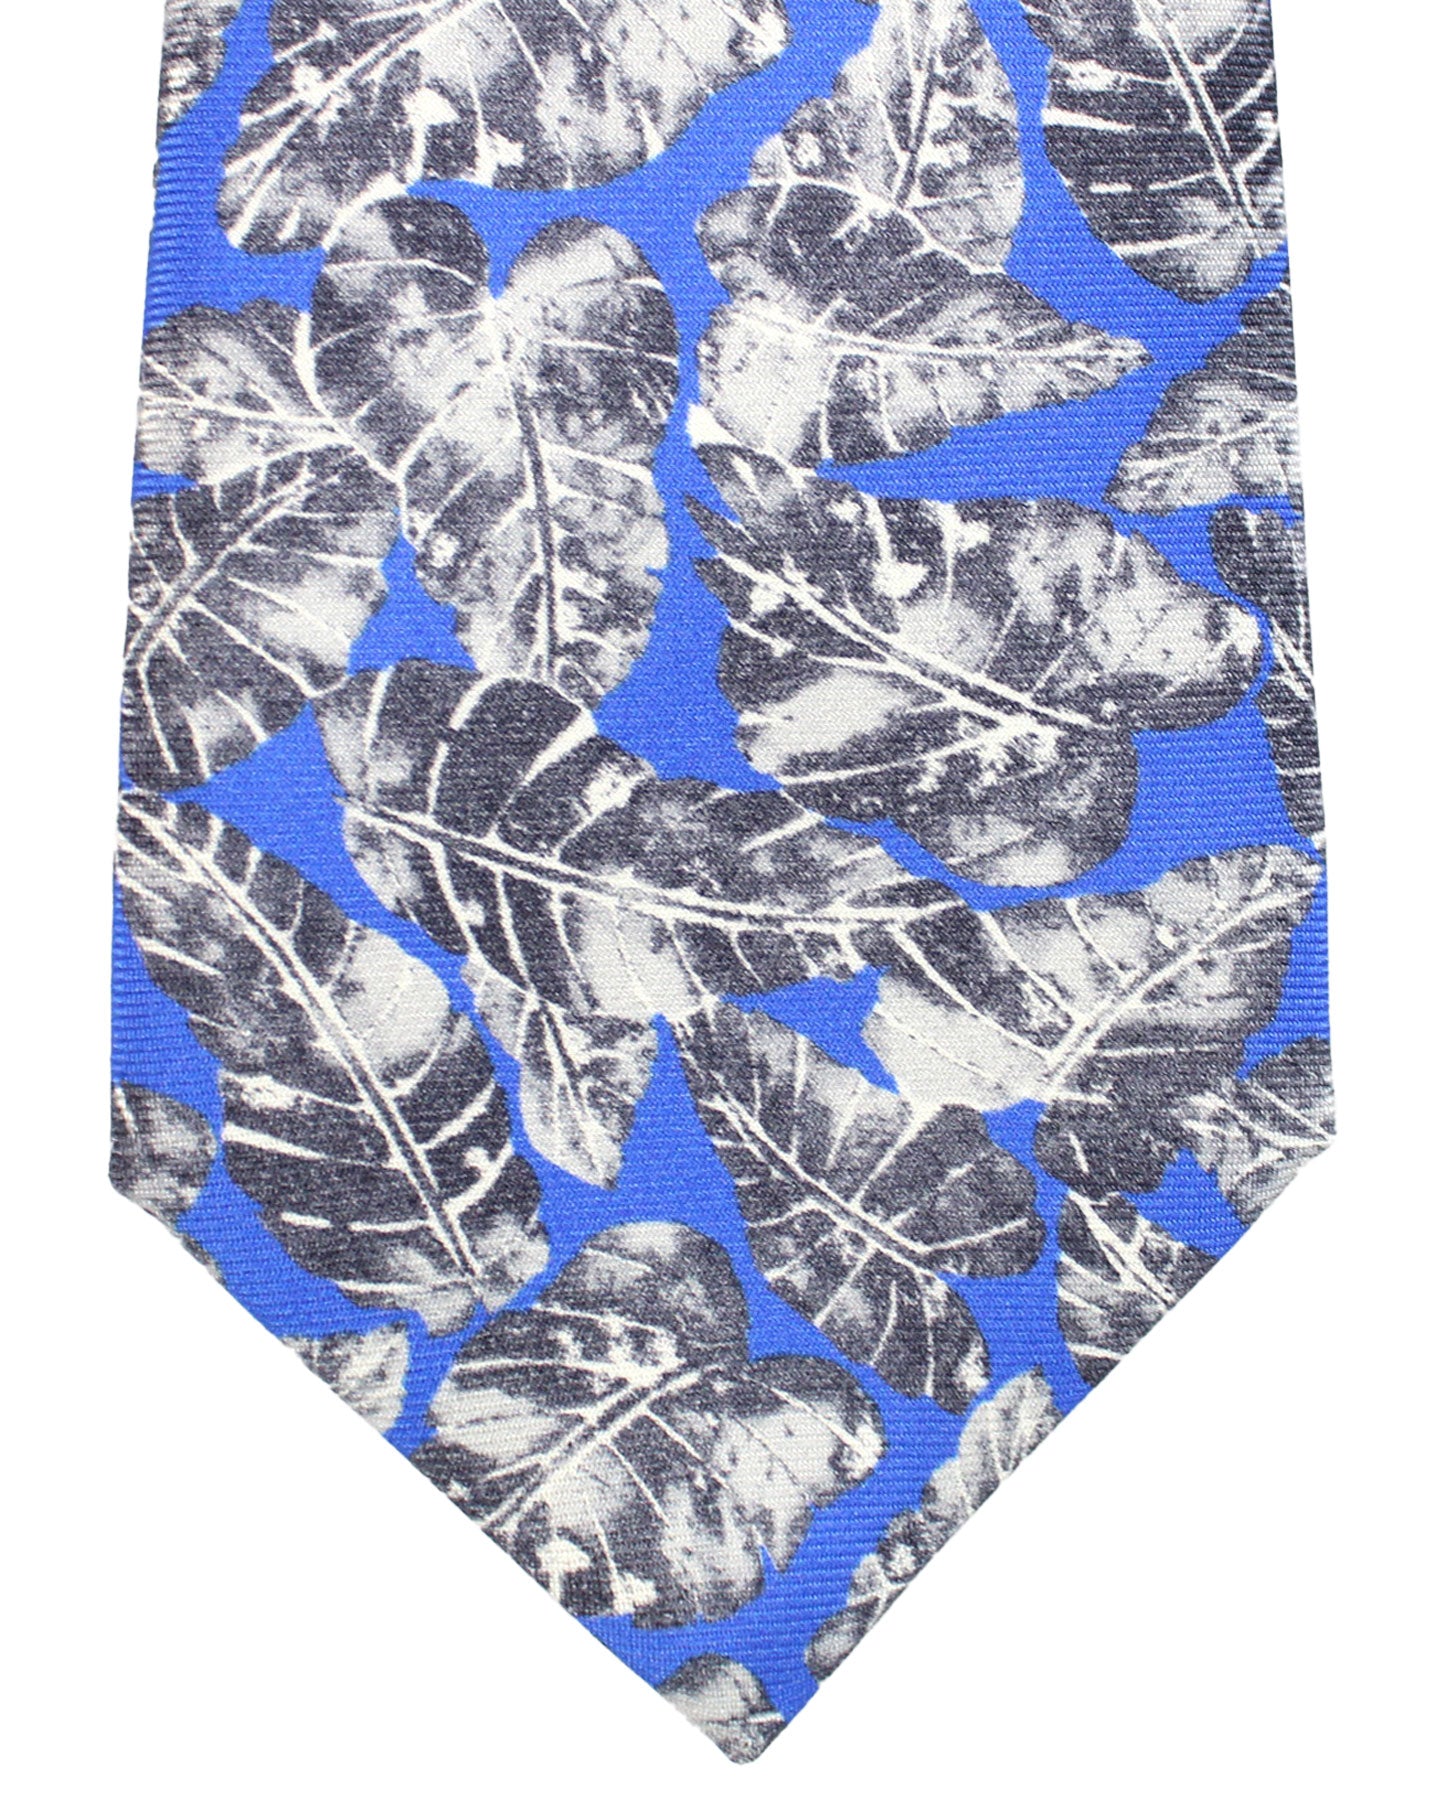 Sartorio Sevenfold Tie Royal Blue Gray Leaves Design